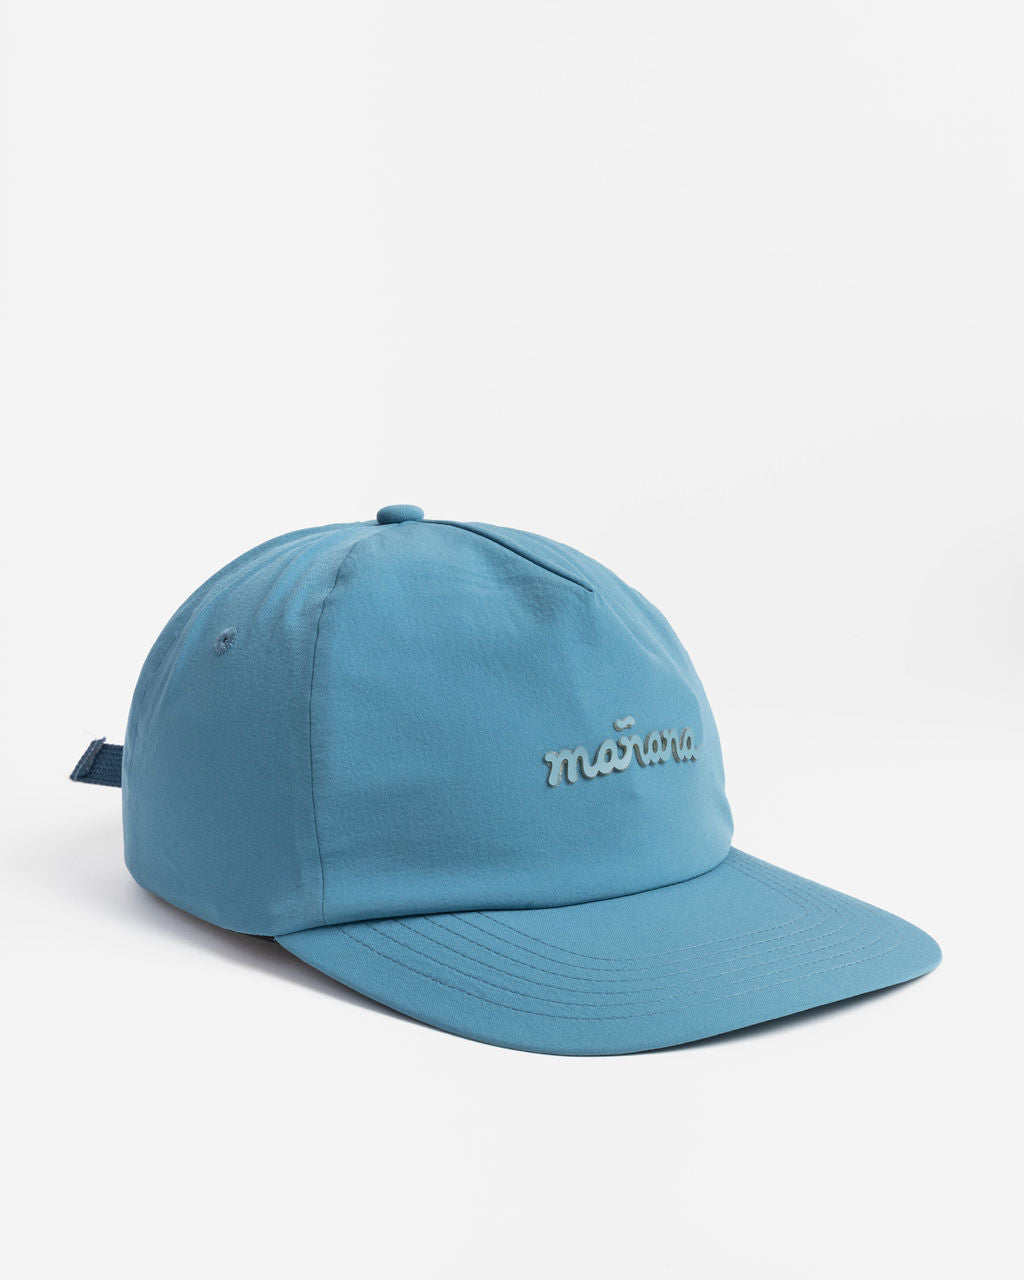 Lake Blue Travel Hat with Manana branding